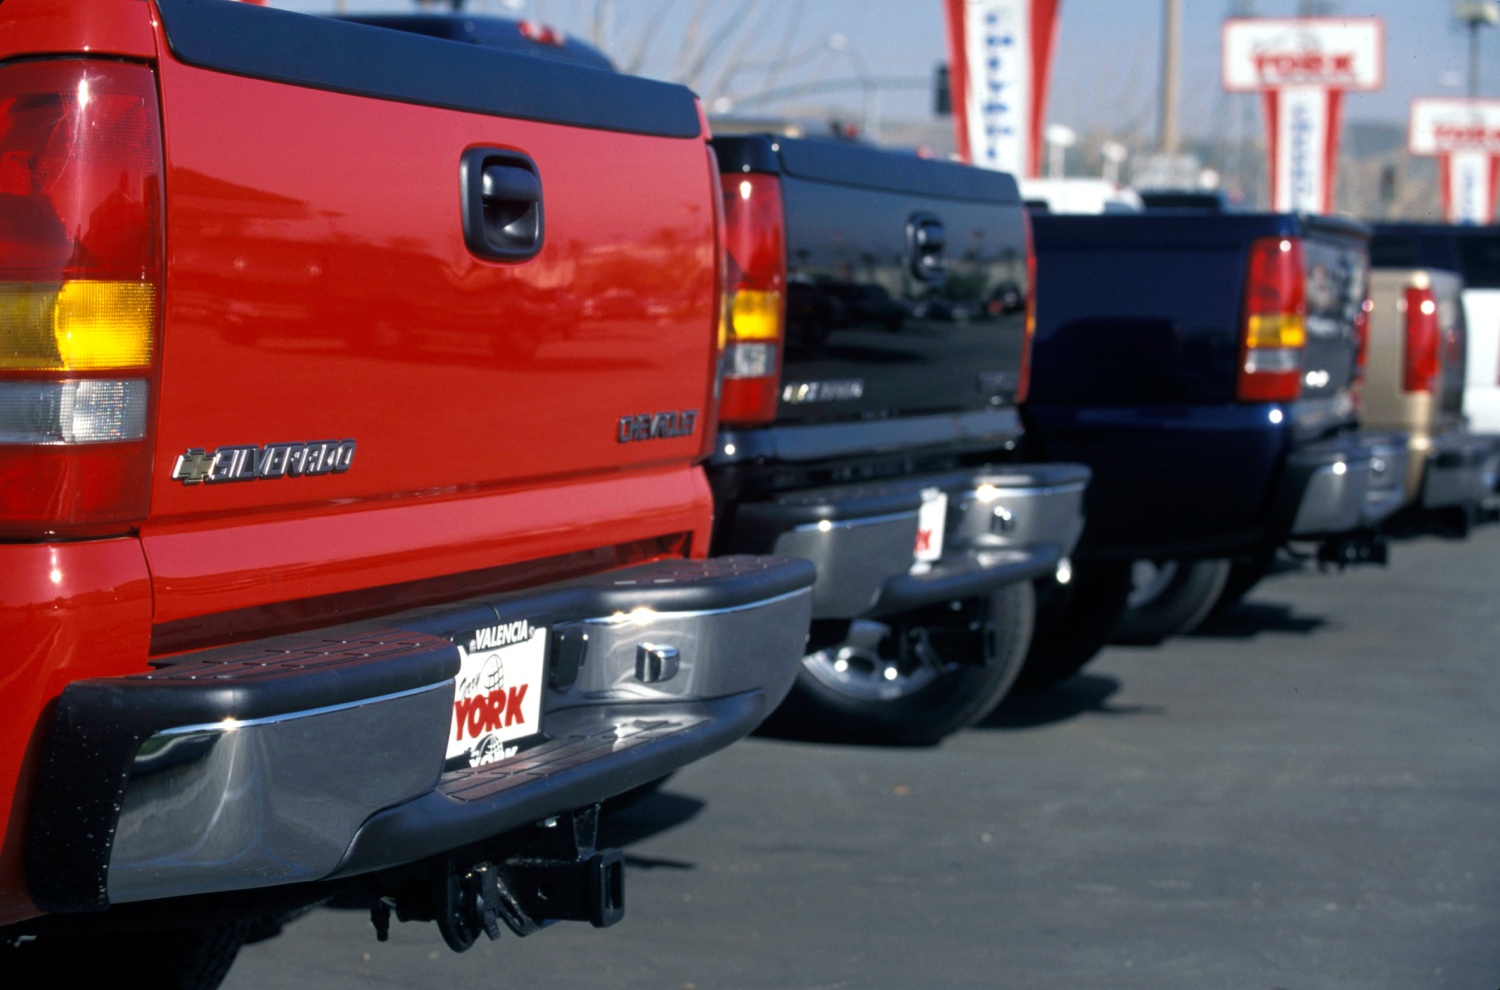 The back of some 2001 Chevy Silverado pickup trucks